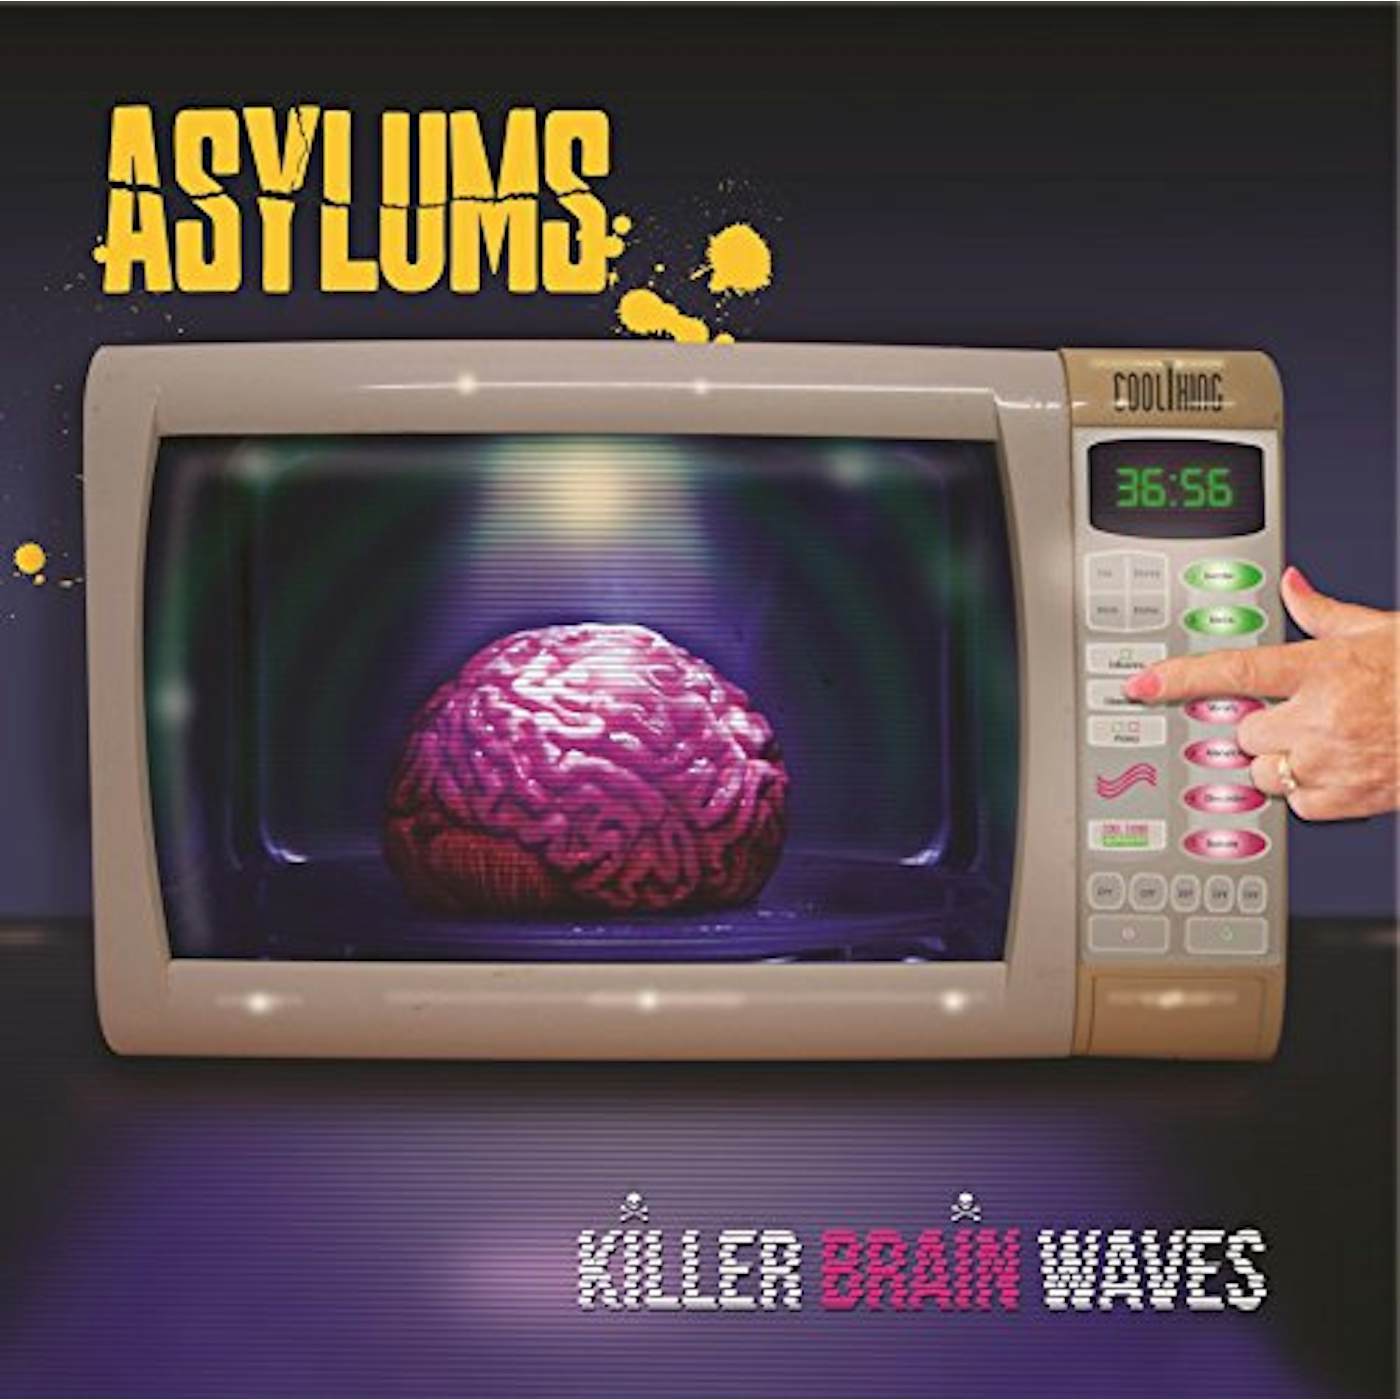 Asylums KILLER BRAIN WAVES Vinyl Record - UK Release